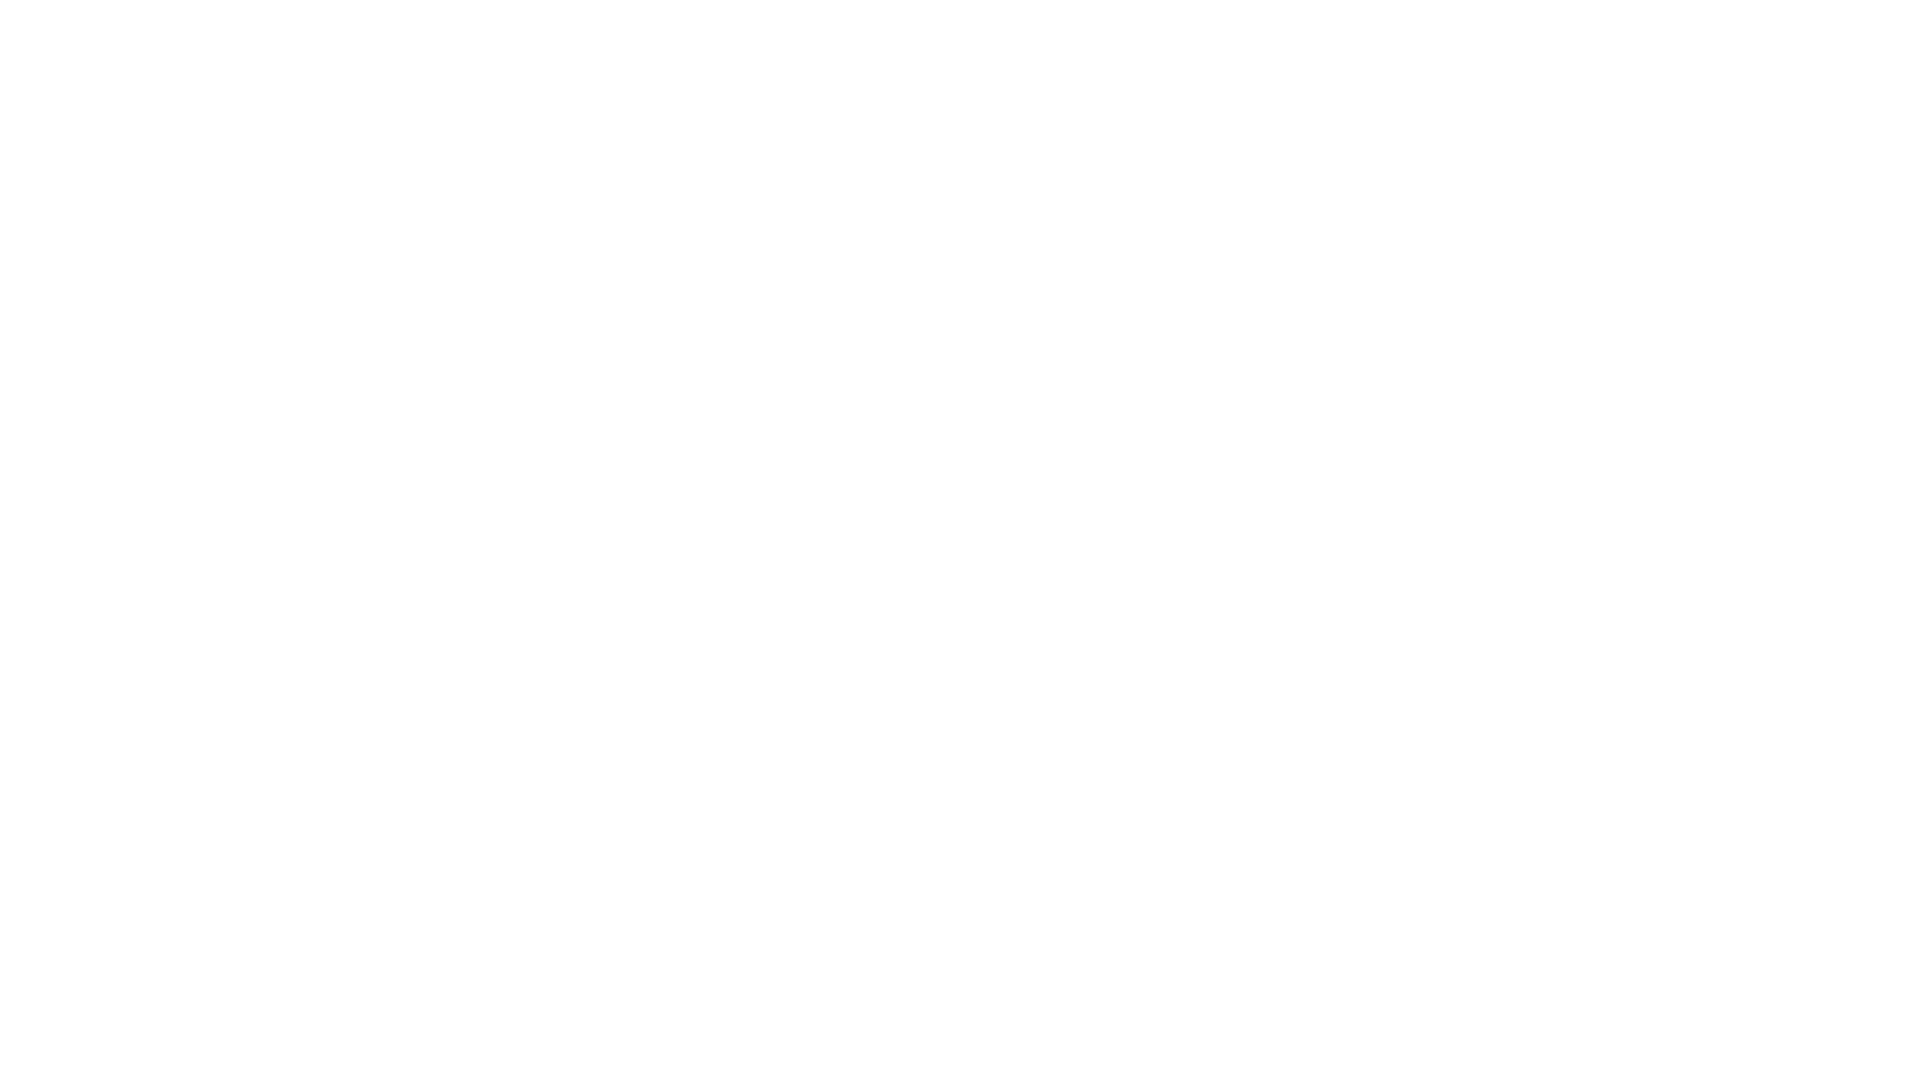 muralist logo